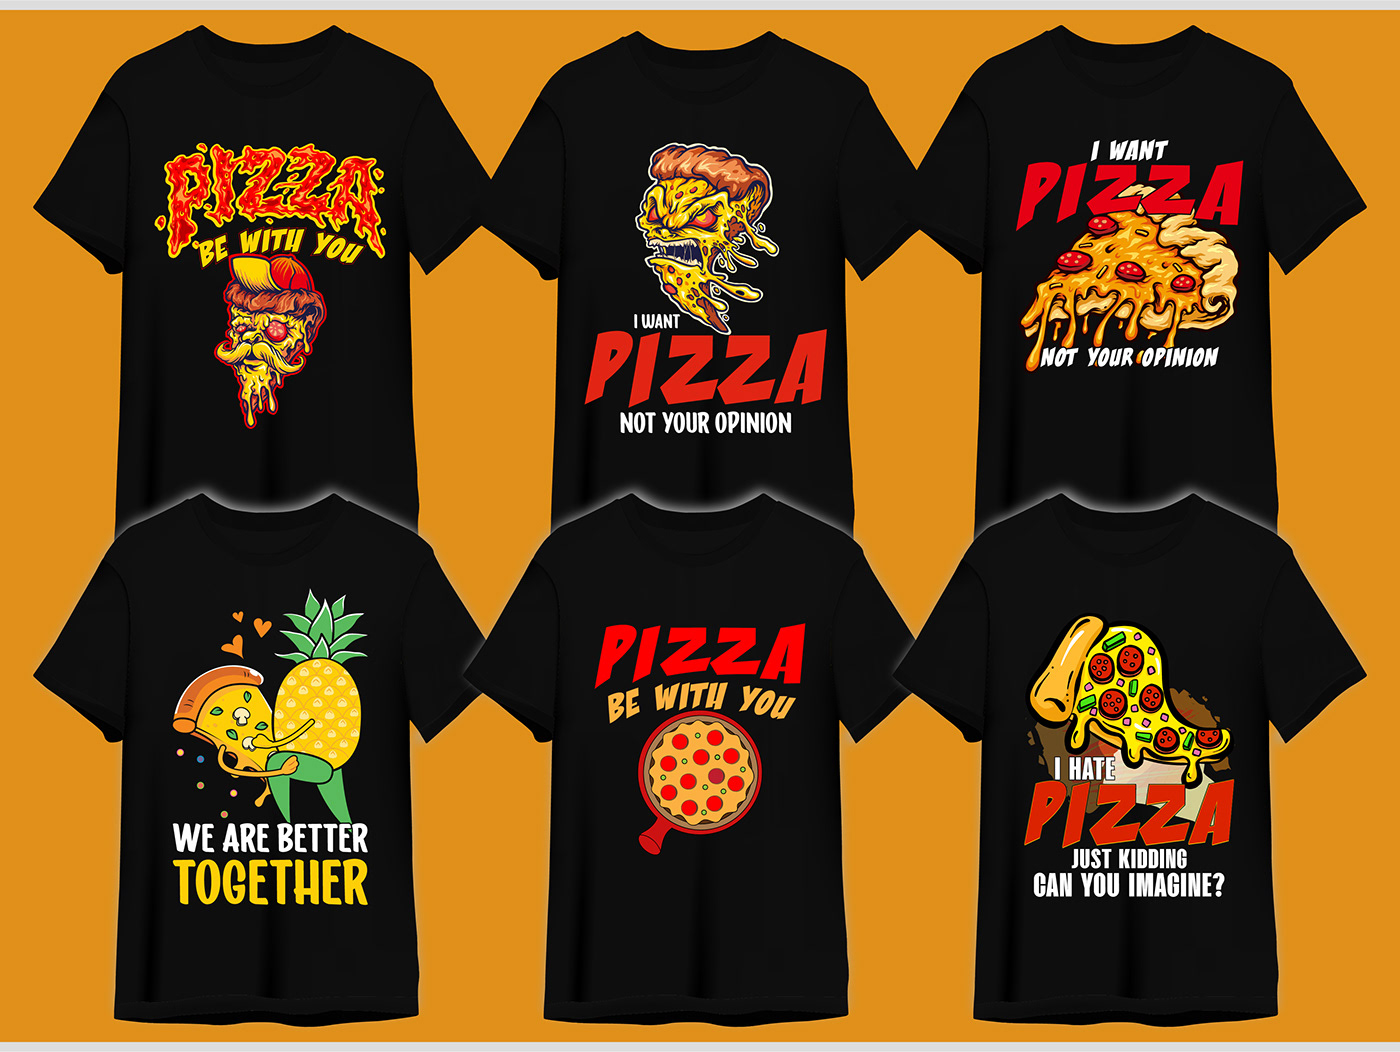 "#Pizza day",
"#Pizza",
"#Pizza T-shirt",
"#pizzadayeveryday",
"#pizzaparty',
"#pizza Illustration",